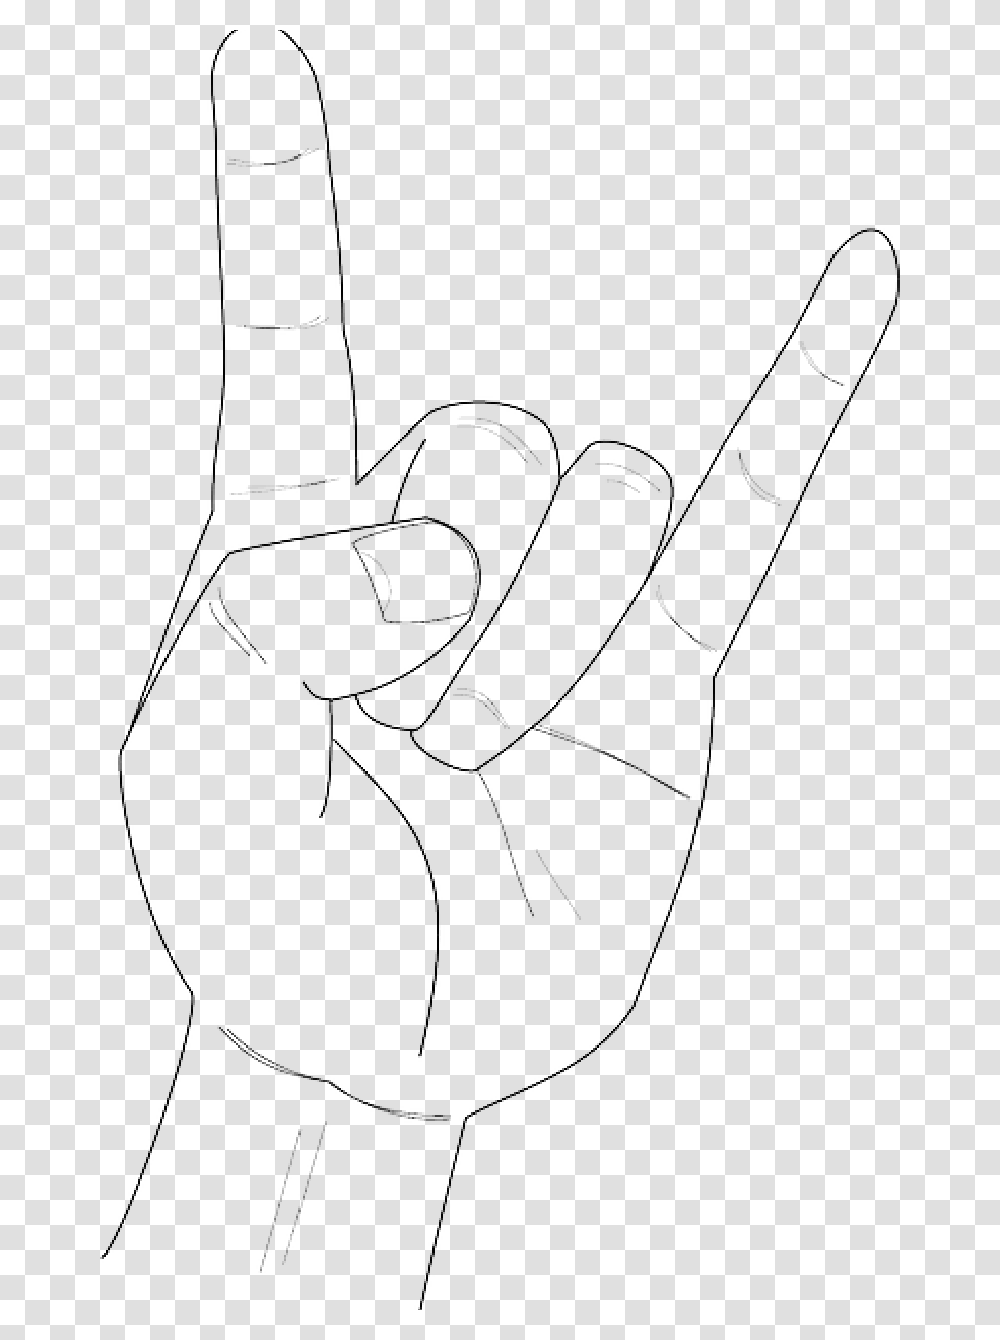 Heavy Metal Horns Music Rock Gesture Hand Public Domain Line Art, Finger, Drawing, Holding Hands, Fist Transparent Png